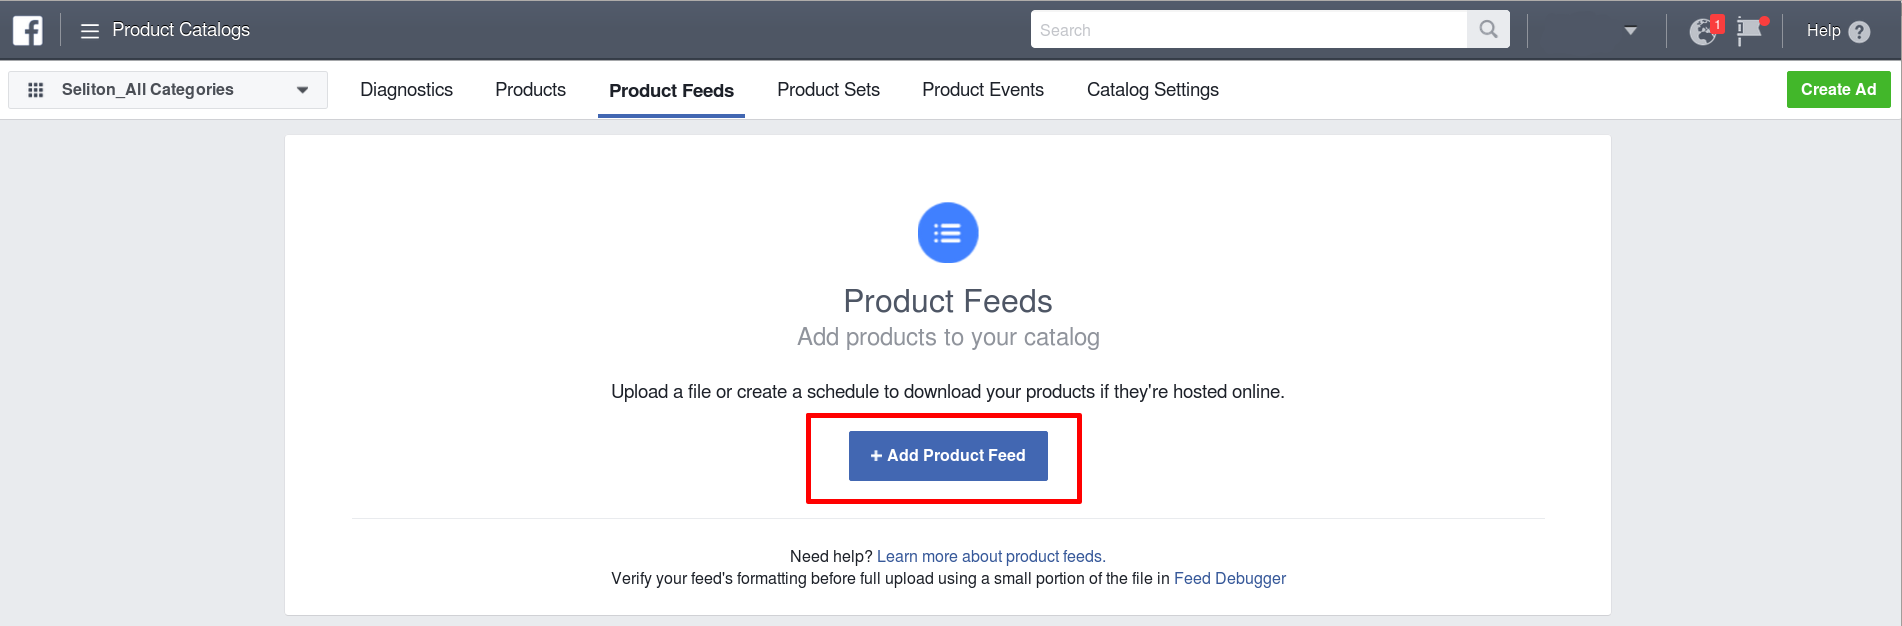 Seliton-Facebook-Dynamic-Product-Ads-Guide-Setup-14